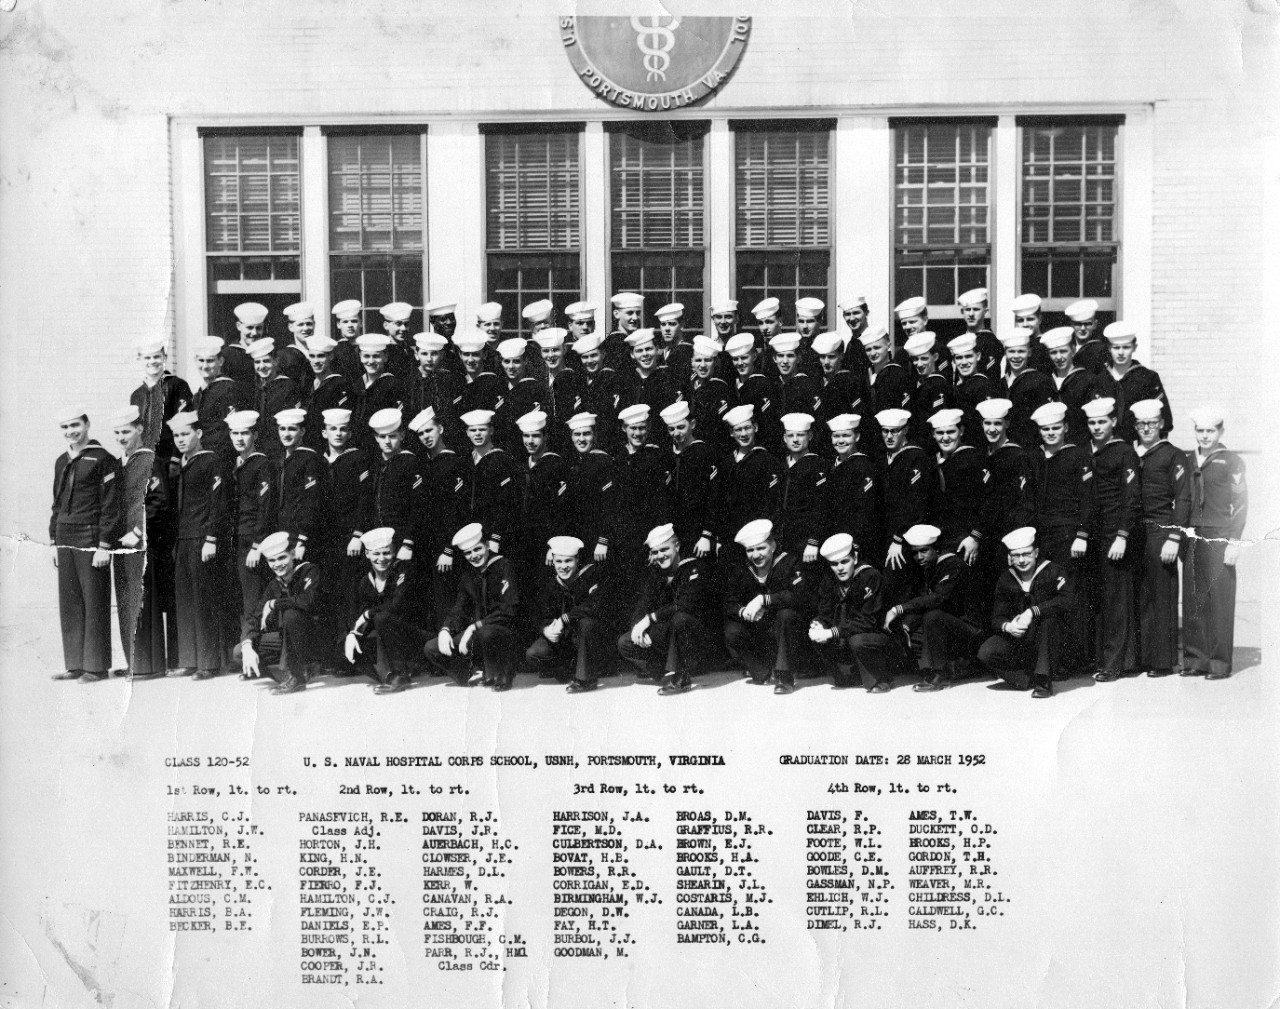 US Naval Hospital Corps School